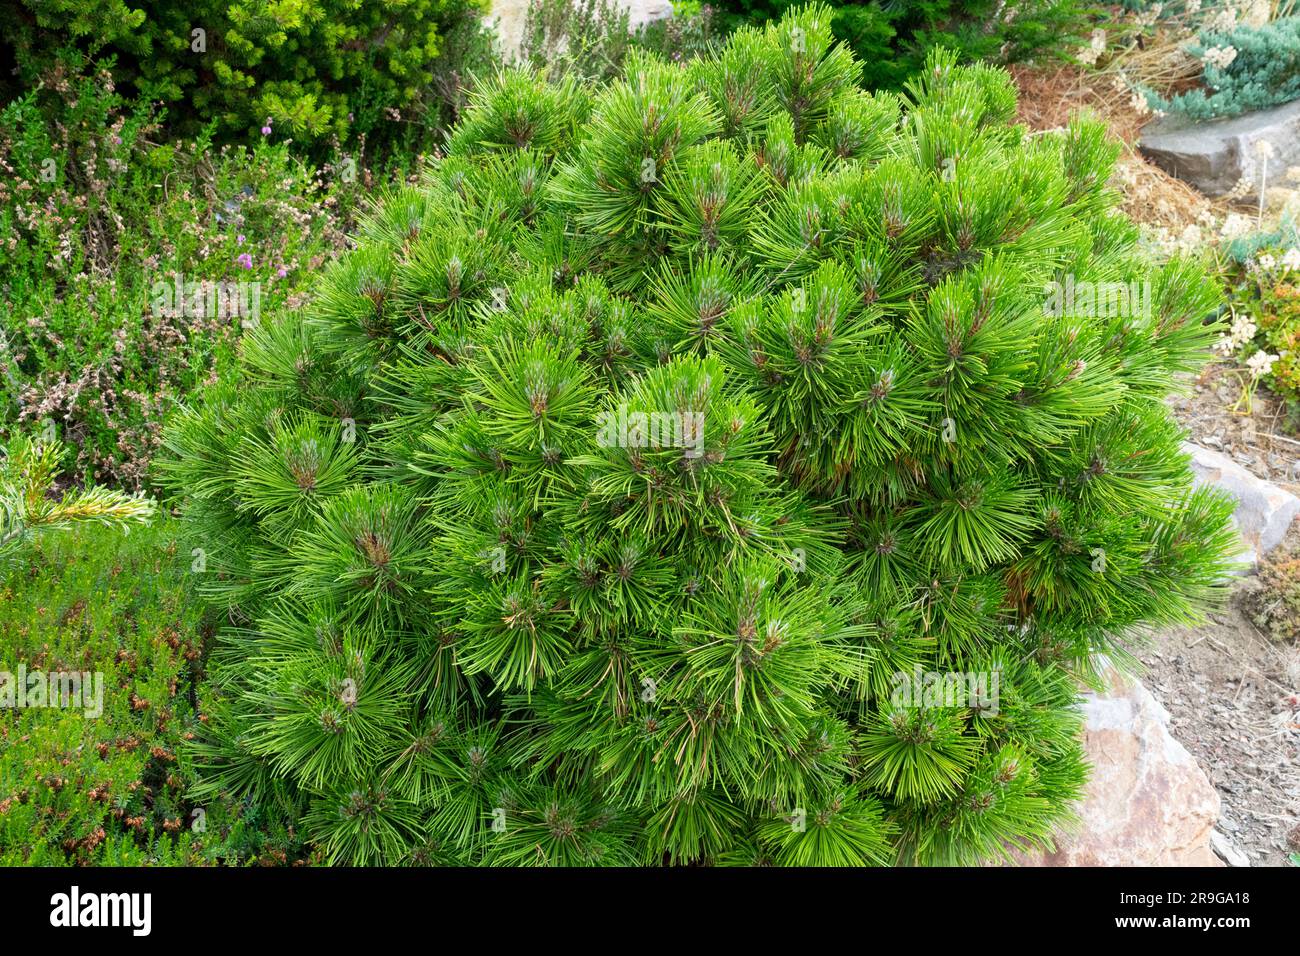 Bosnian Pine, Pinus heldreichii 'Smidtii' in garden Stock Photo